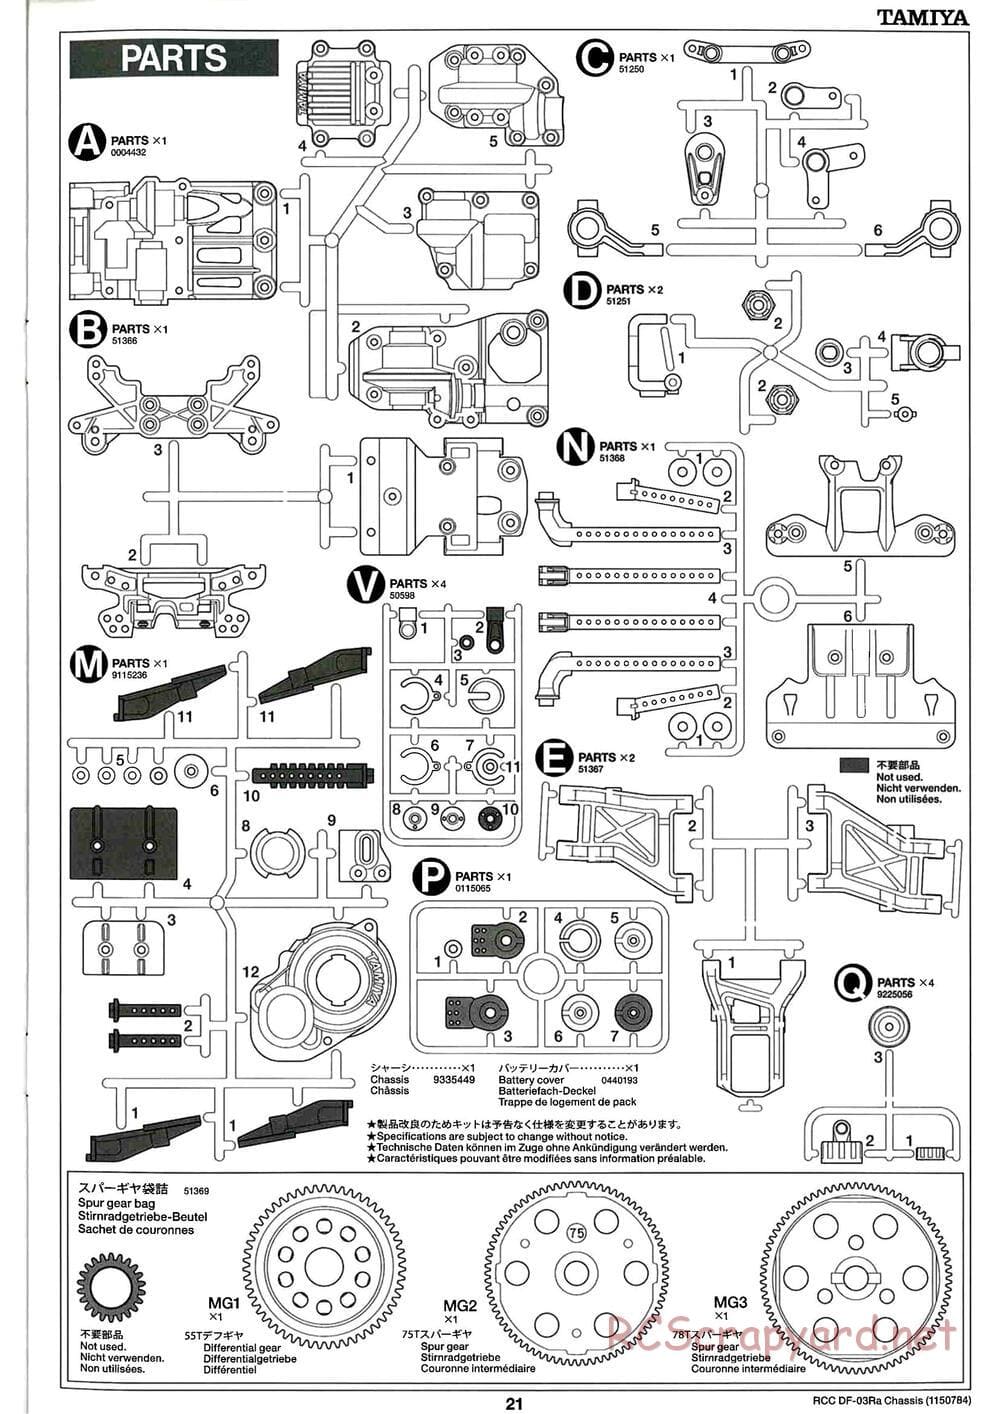 Tamiya - DF-03Ra Chassis - Manual - Page 21